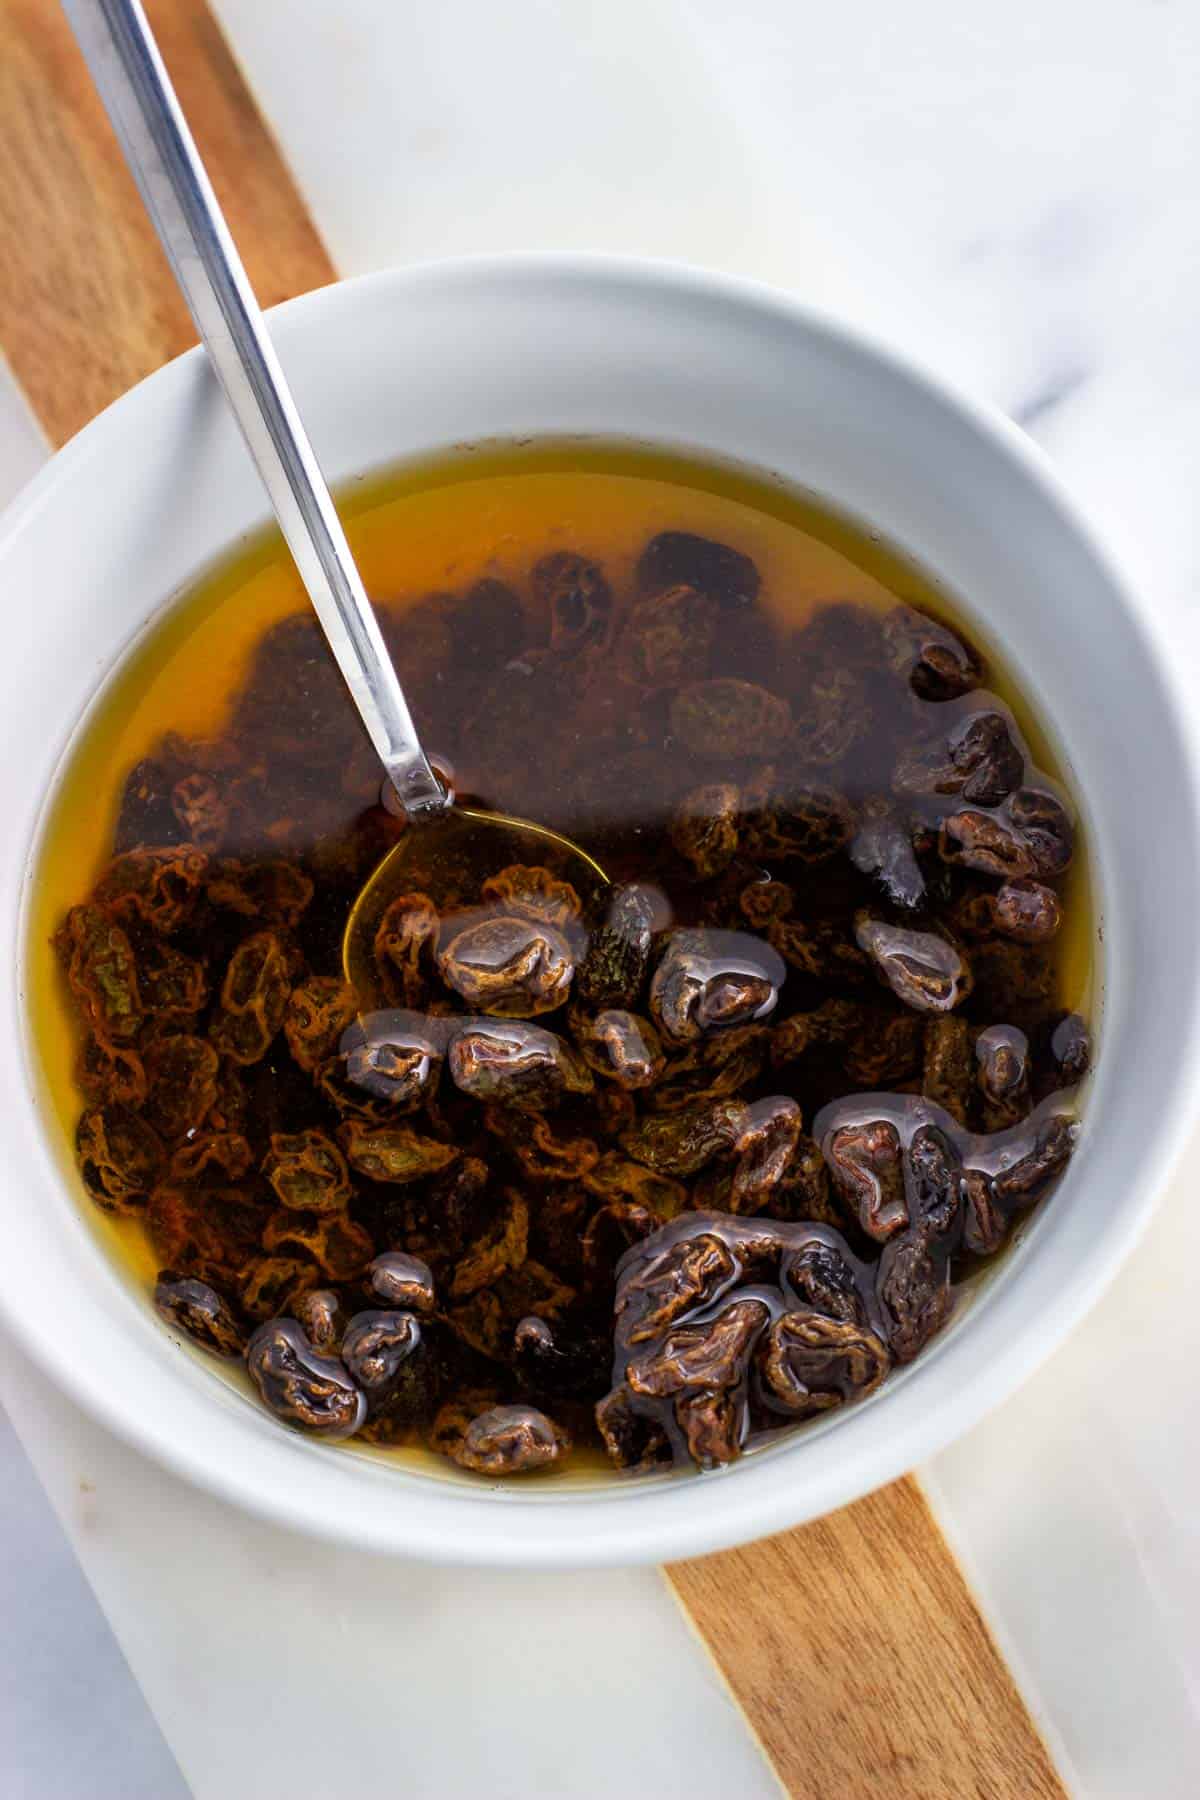 A bowl of raisins soaking in water and brown sugar.